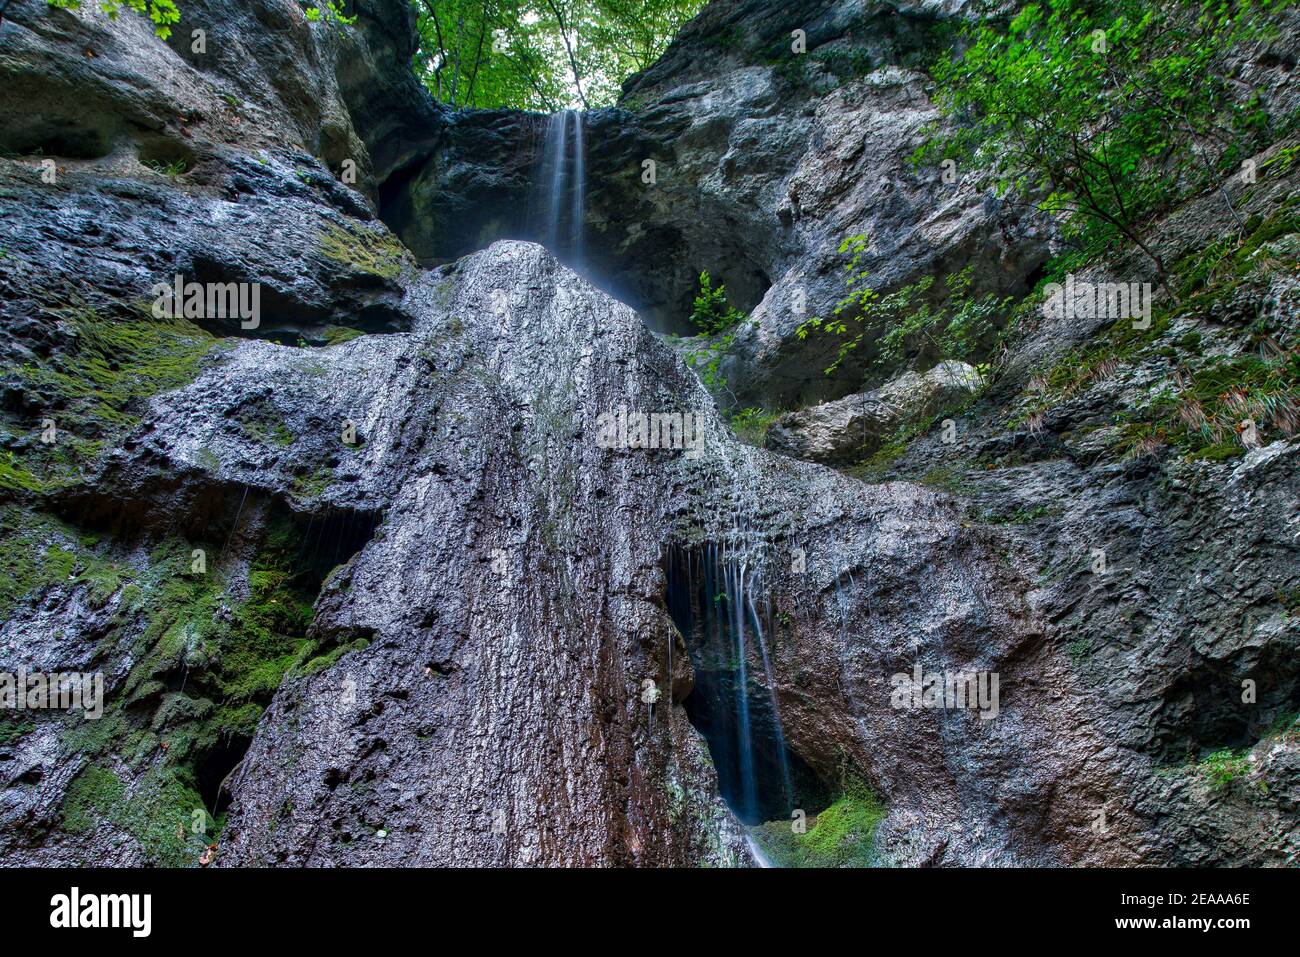 Waterfall with tufa rocks Stock Photo